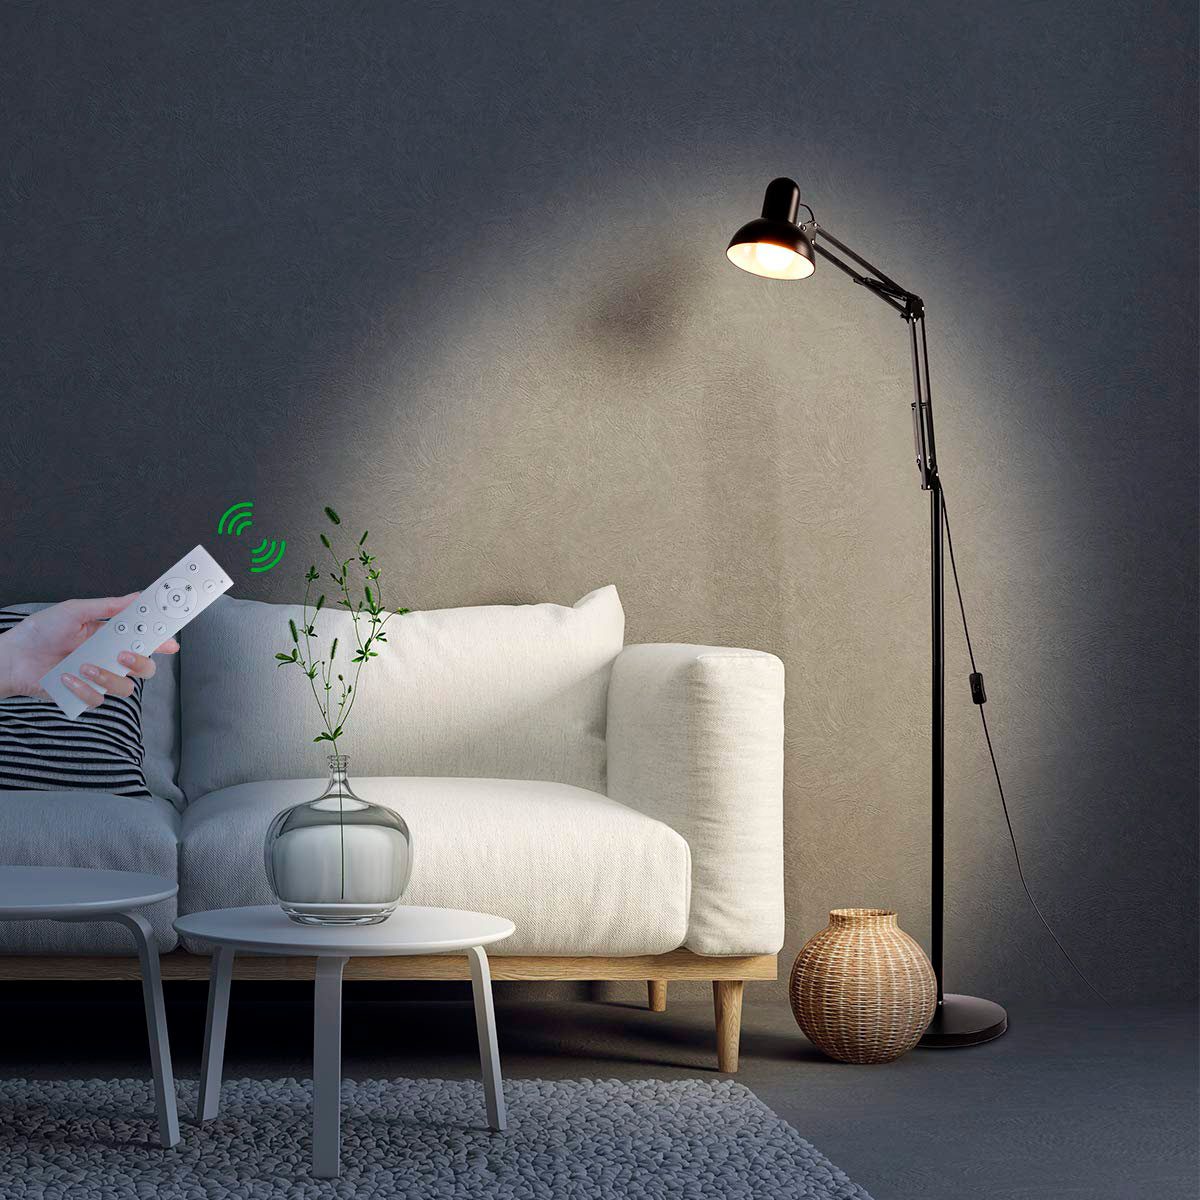 10 Living Room Lighting Ideas We Love | Family Handyman